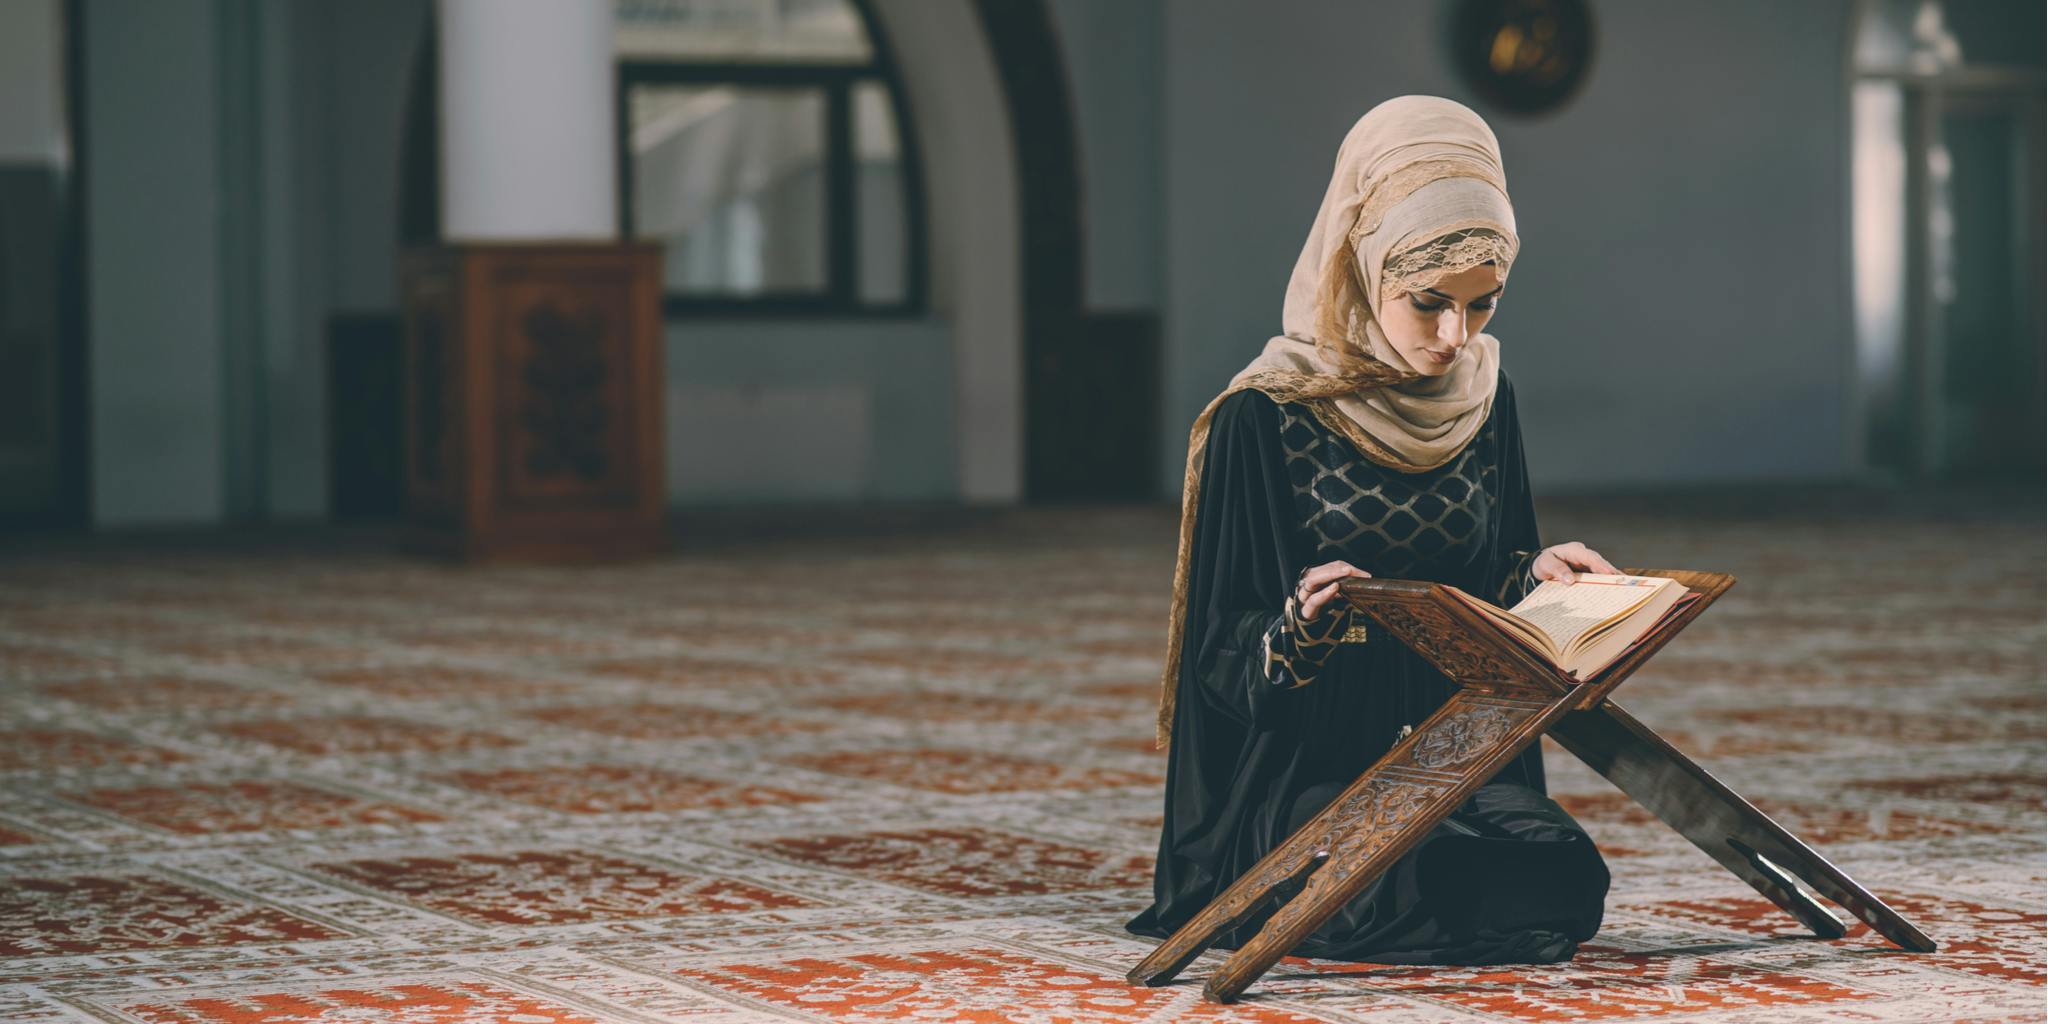 Muslim woman reading book